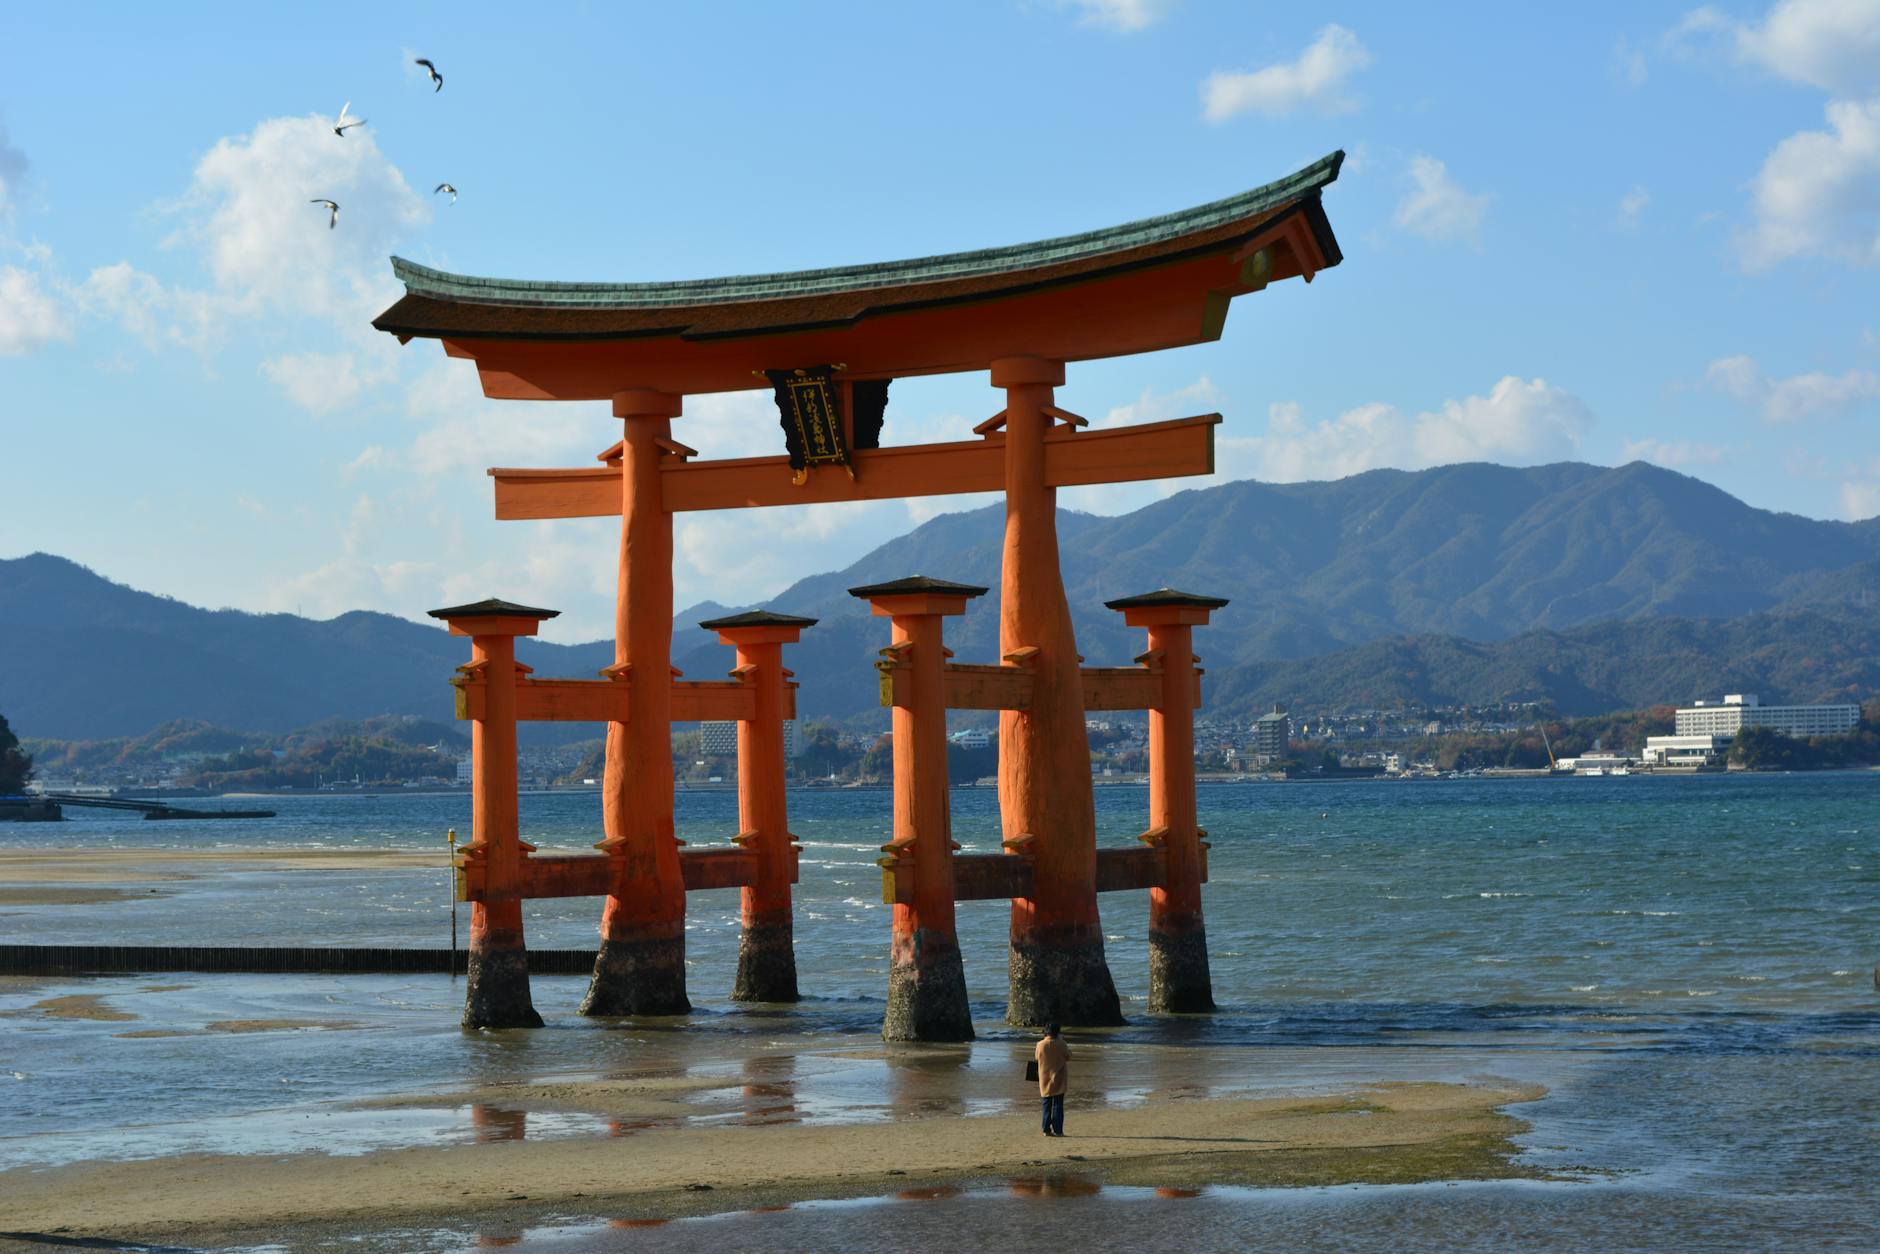 Itsukushima Shrine near Body of Water